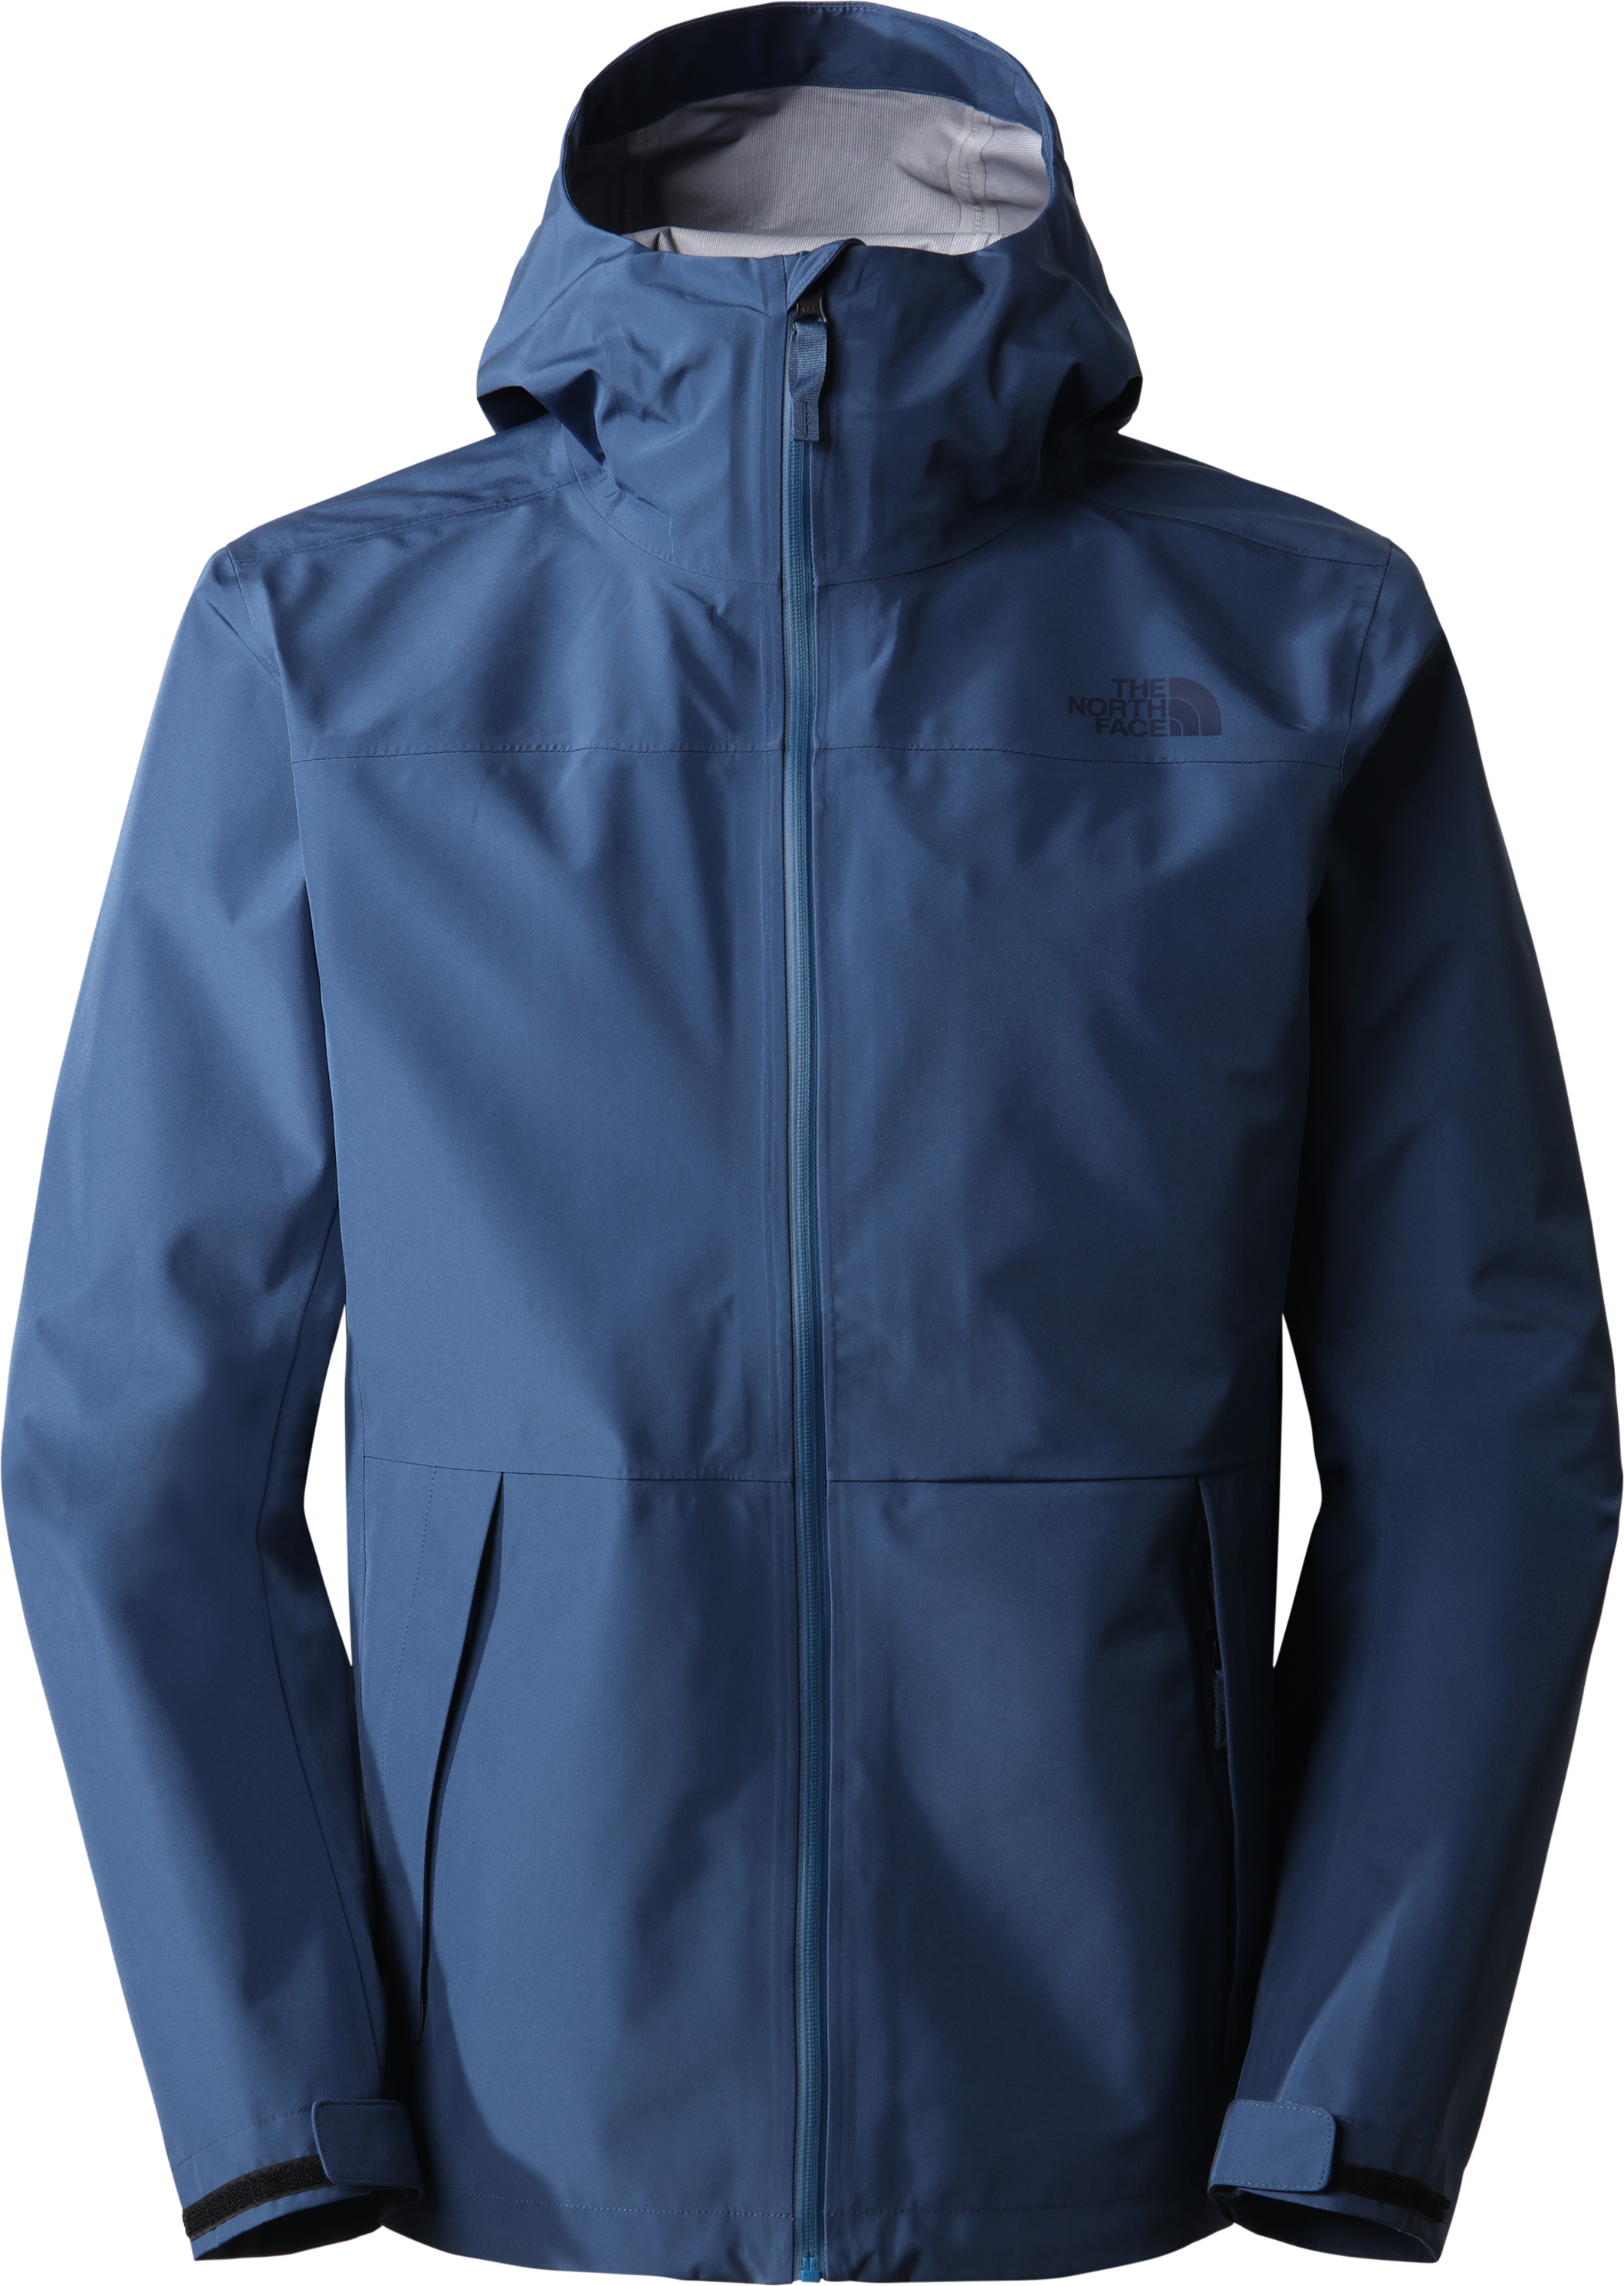 The North Face Men’s Dryzzle FutureLight Jacket Shady Blue